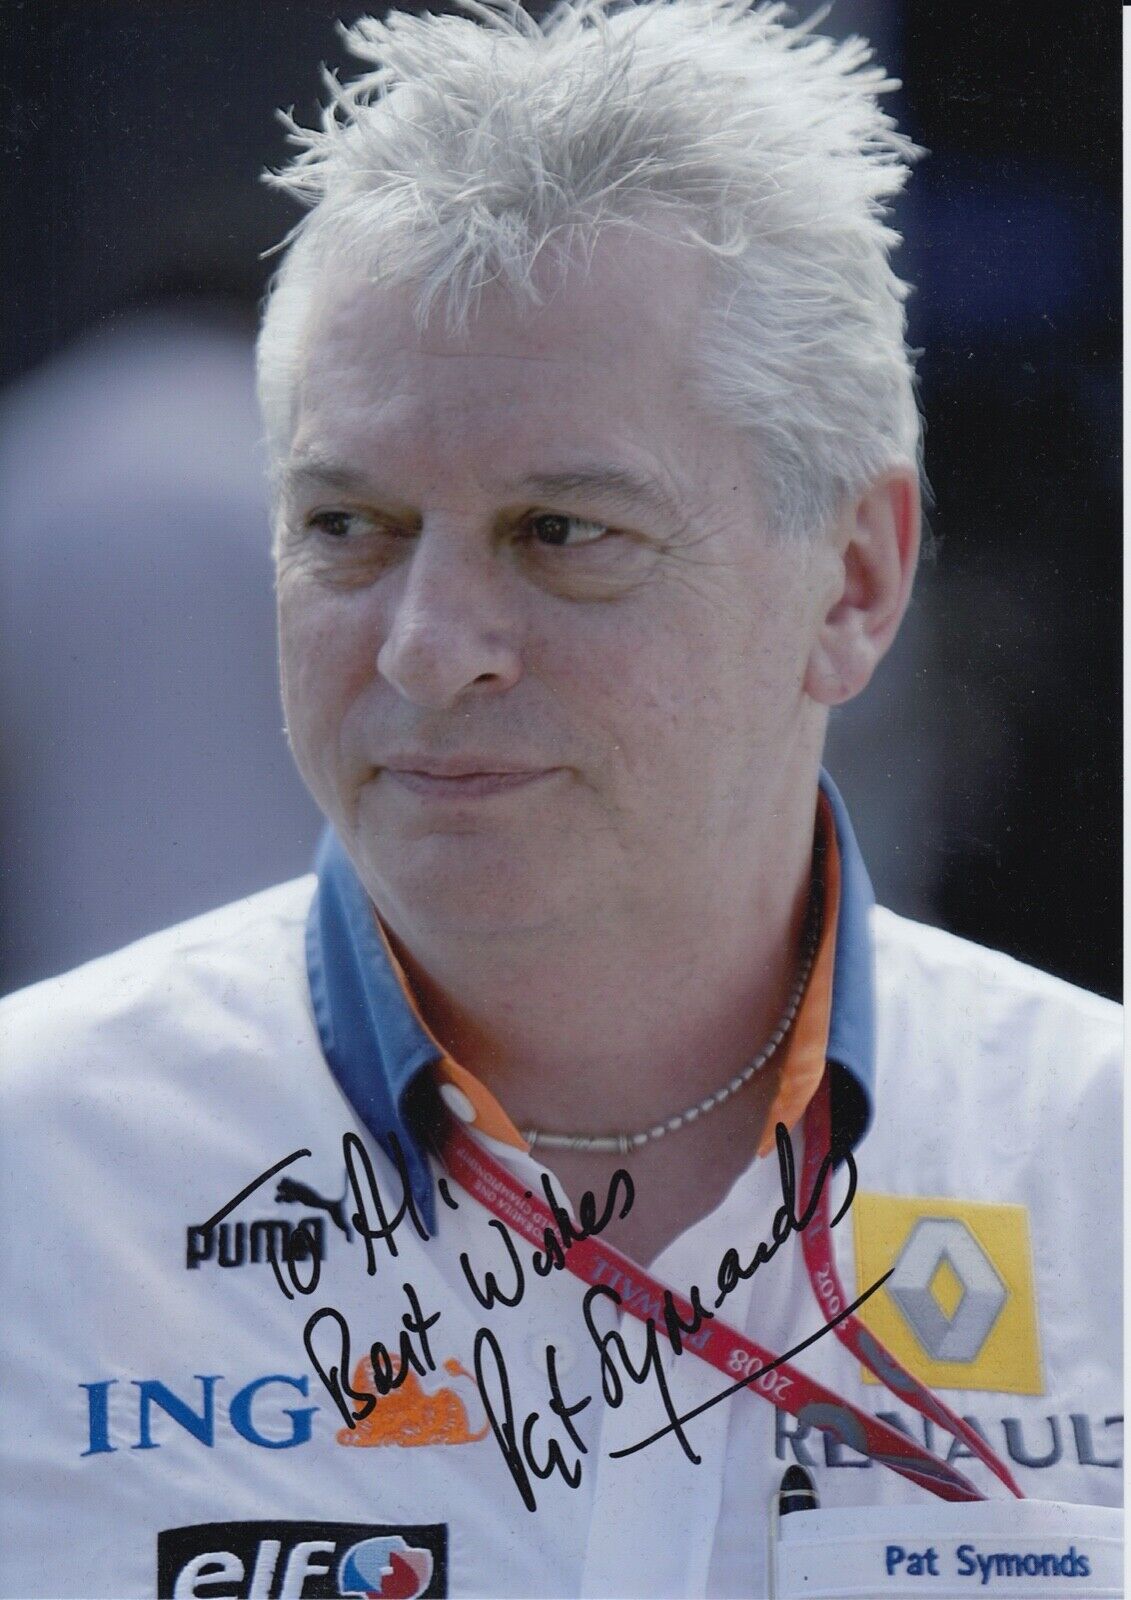 Pat Symonds Hand Signed 12x8 Photo Poster painting - Formula 1 Autograph.